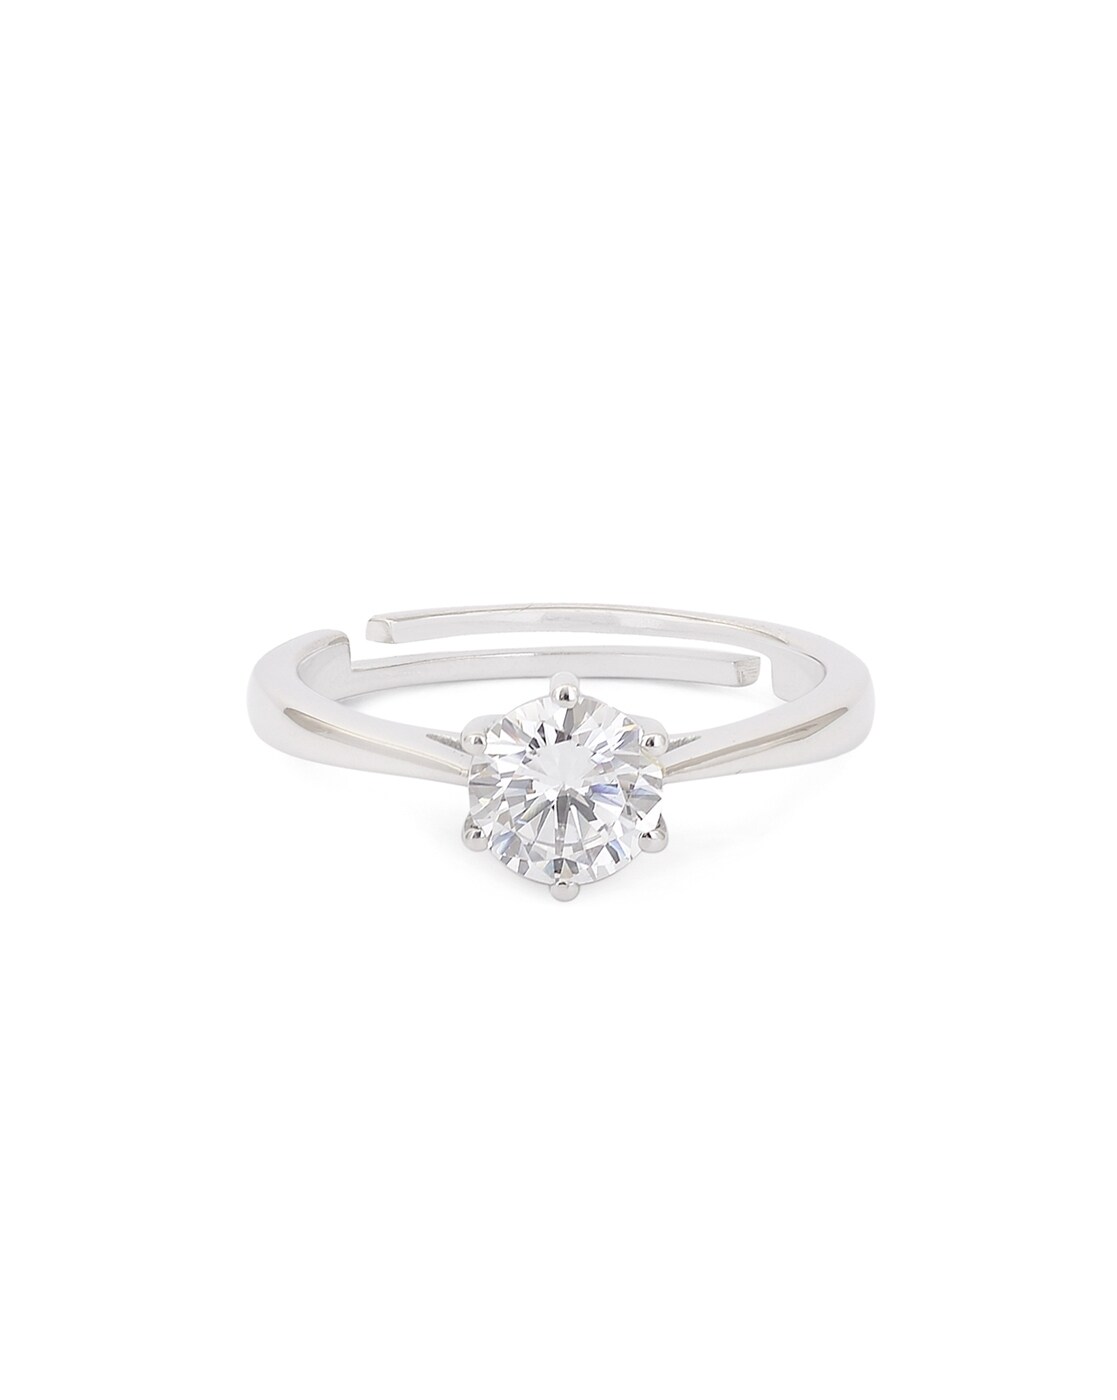 4.24 carat G VS2 Cushion Cut 3-stone Diamond Ring (GIA Certified, Platinum)  — Shreve, Crump & Low